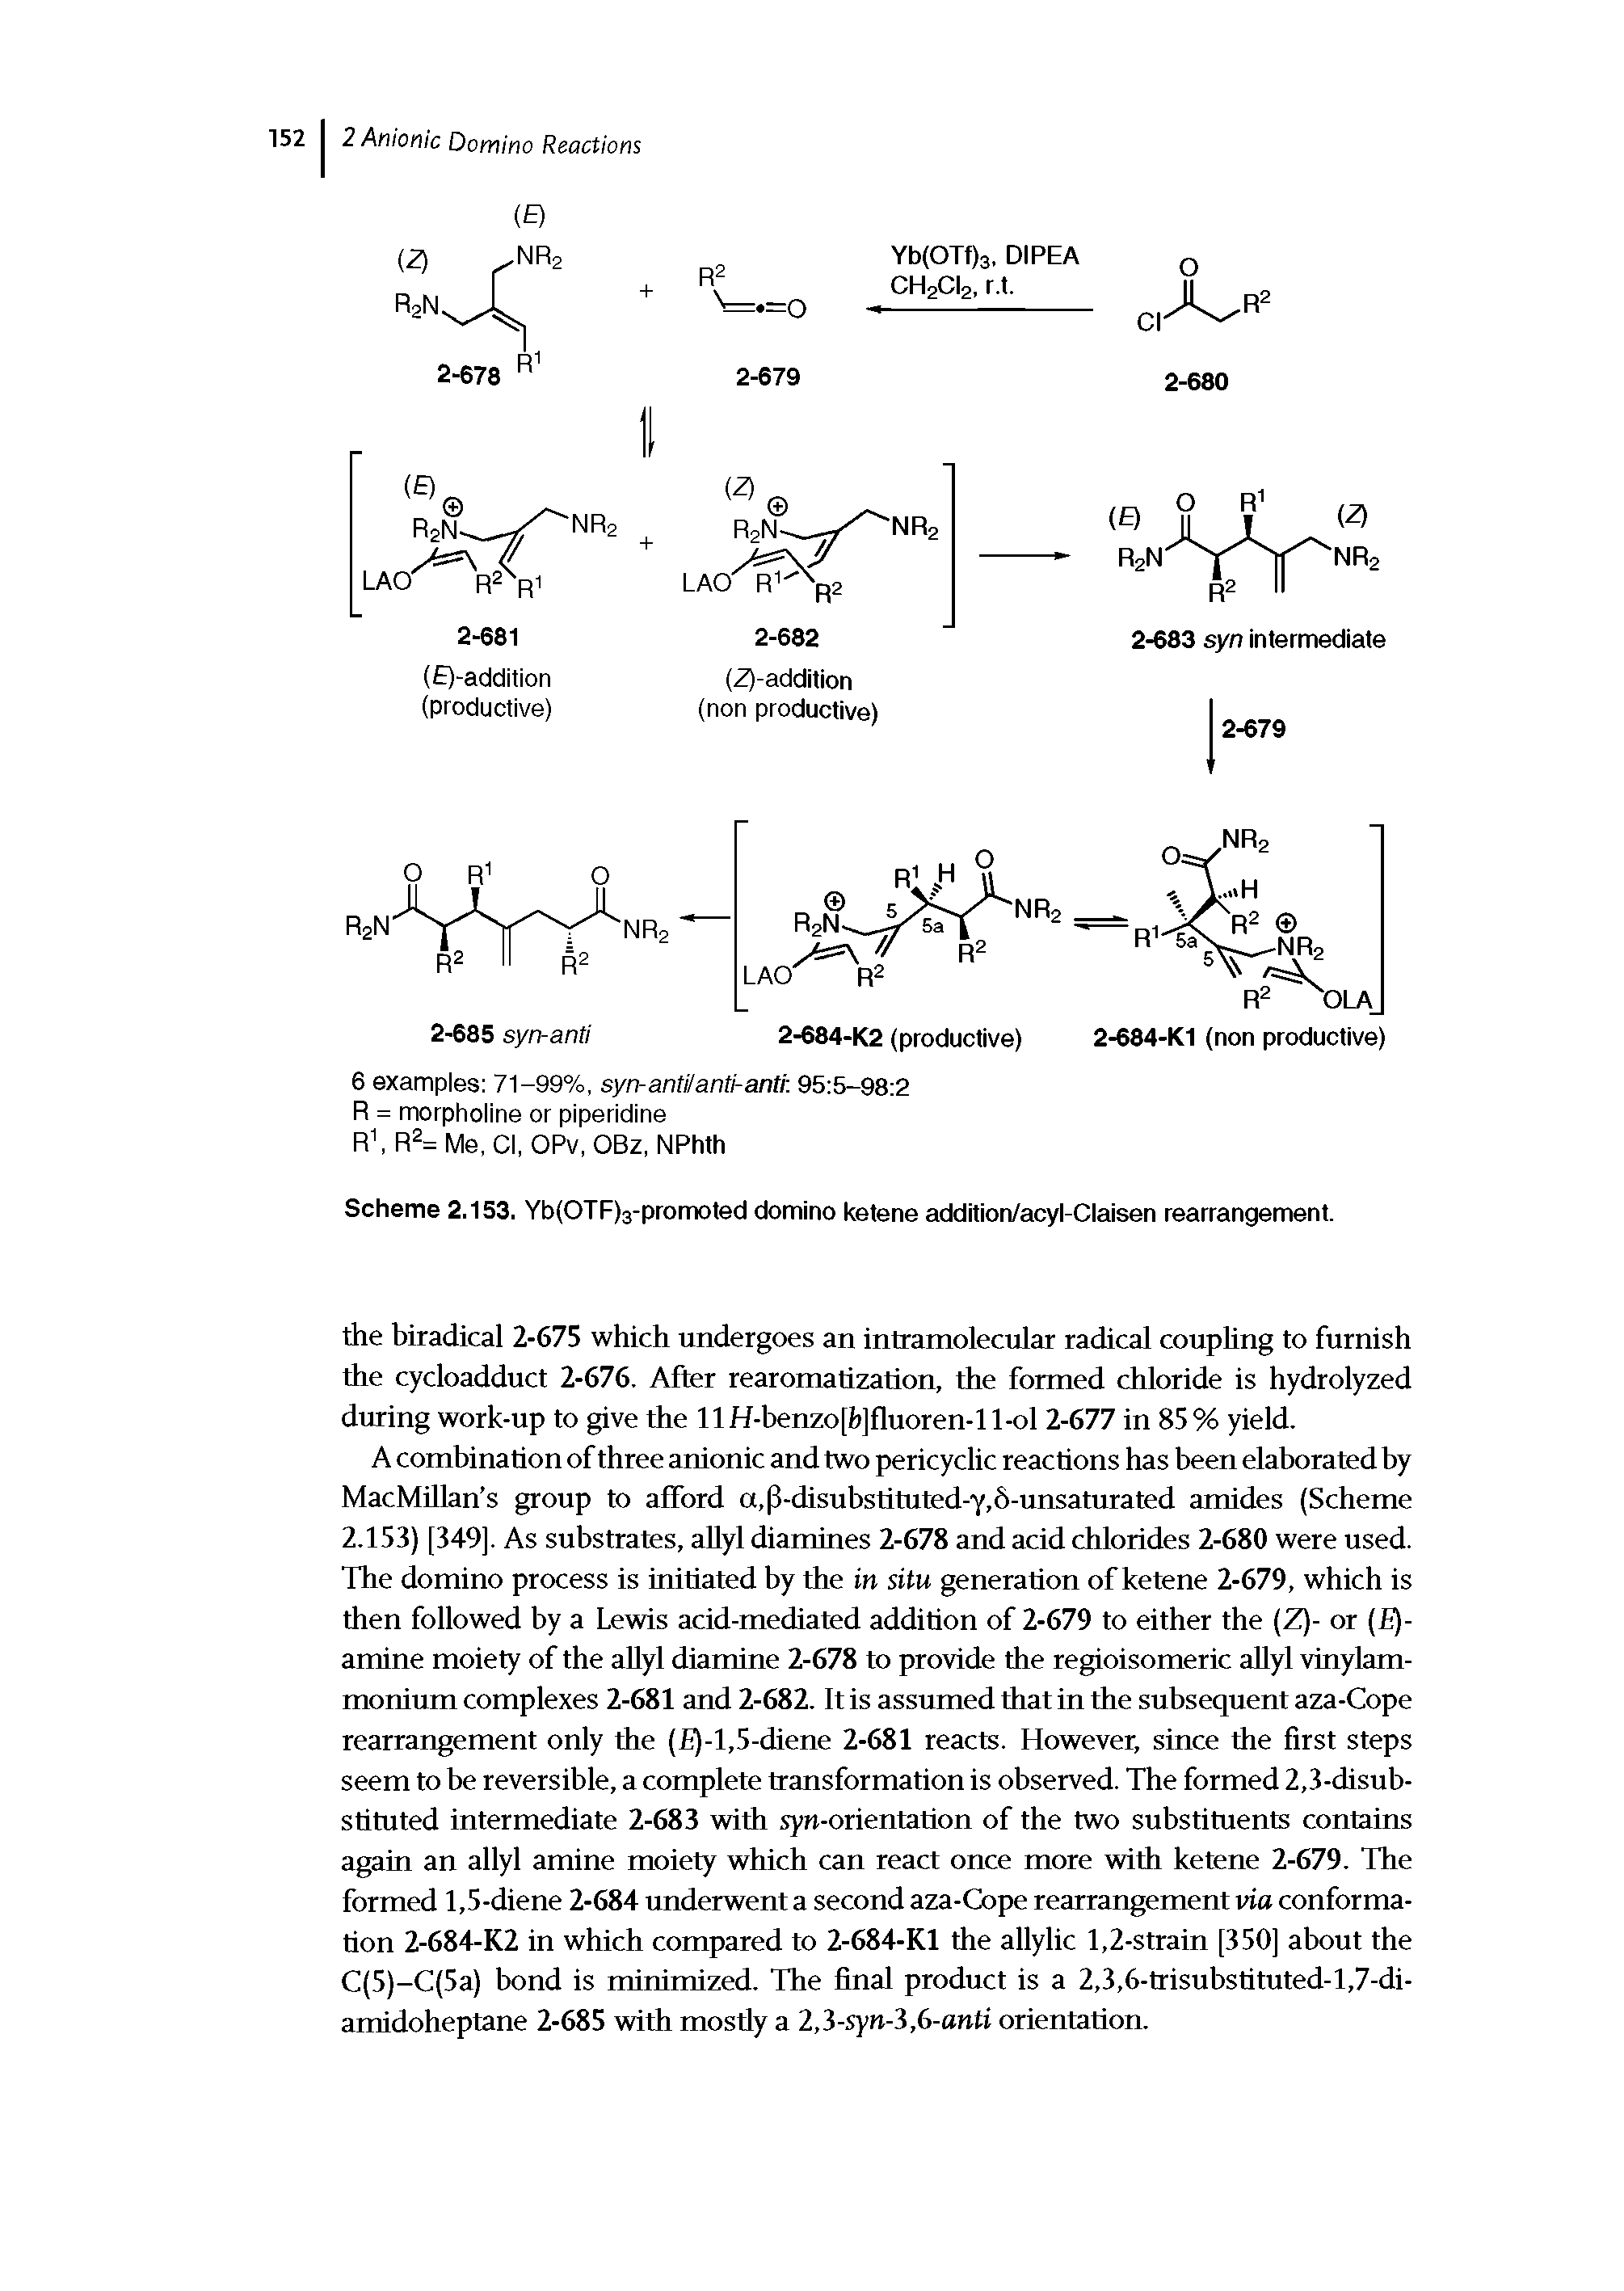 Scheme 2.153. Yb(OTF)3-promoted domino ketene addition/acyl-Claisen rearrangement.